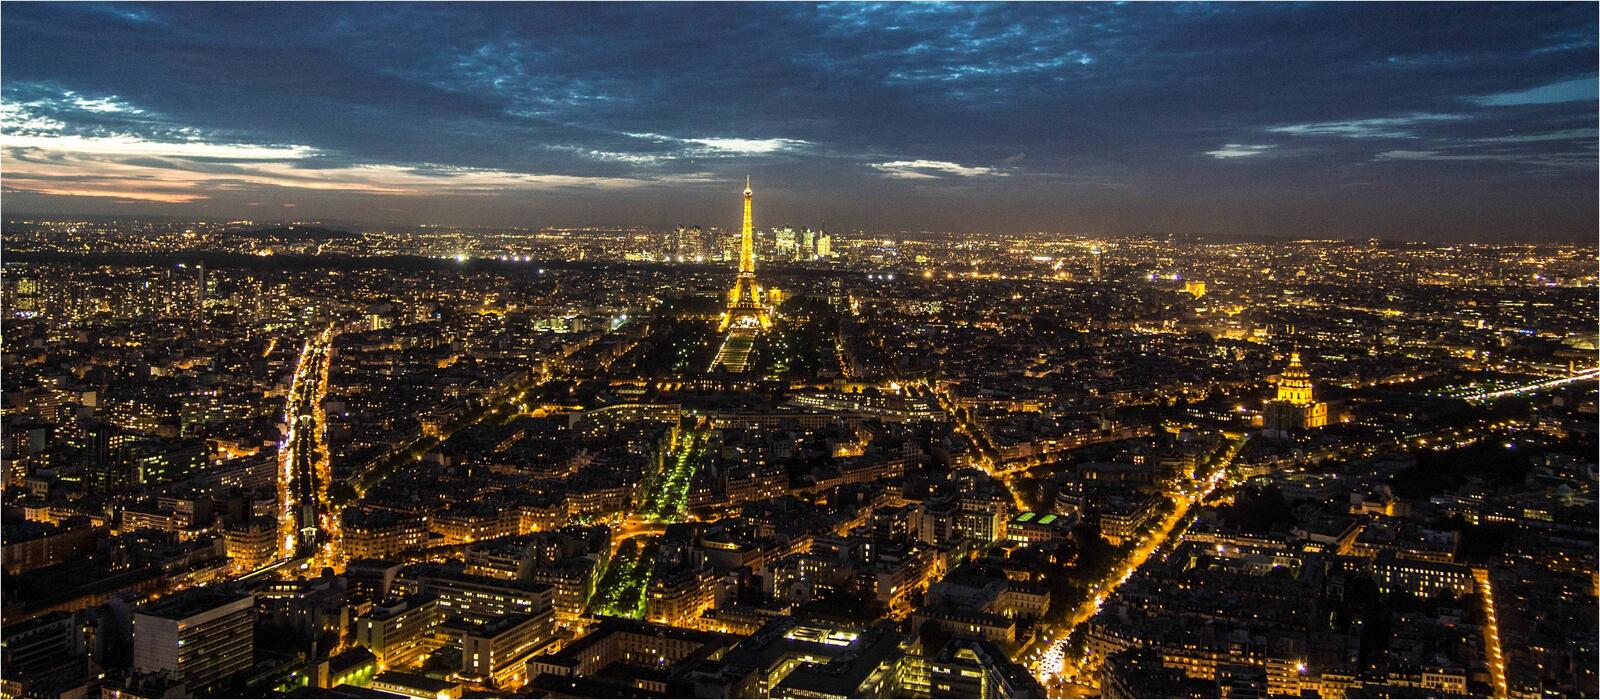 Wallpapers Eiffel Tower night cityscape on the desktop